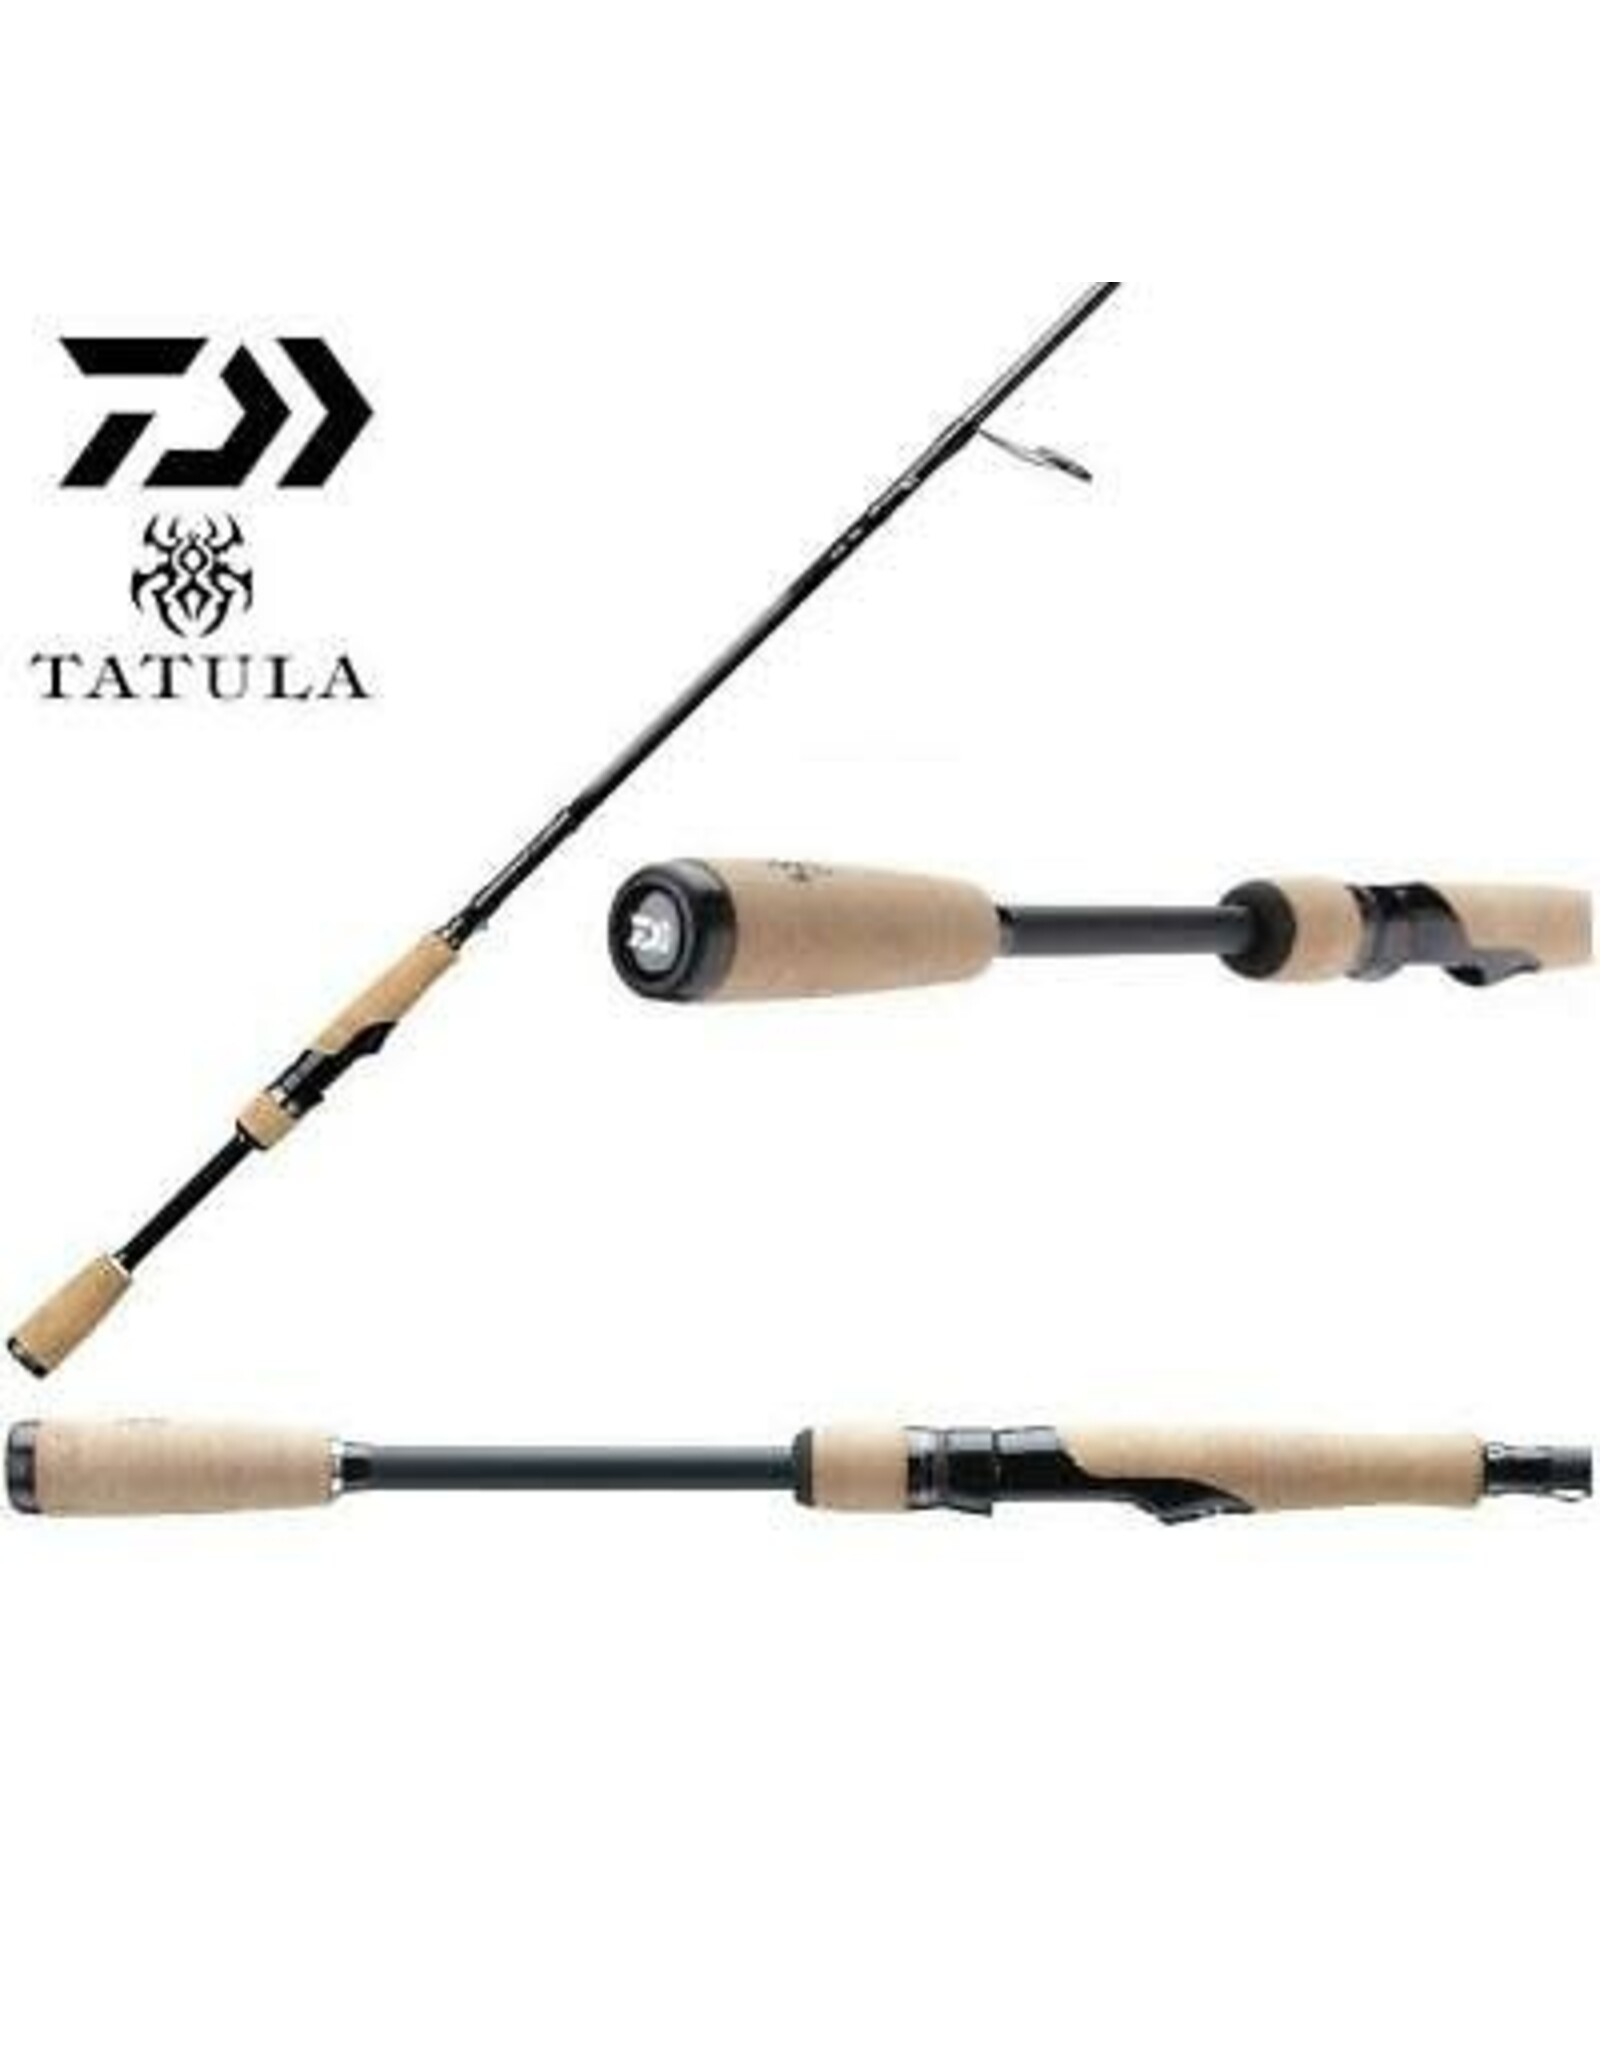 Daiwa Daiwa Tatula Series Rod 7'3" Med X Fast Action Spinning 1 pc, 3/16-1/2oz Lures, Line Weight 6-14